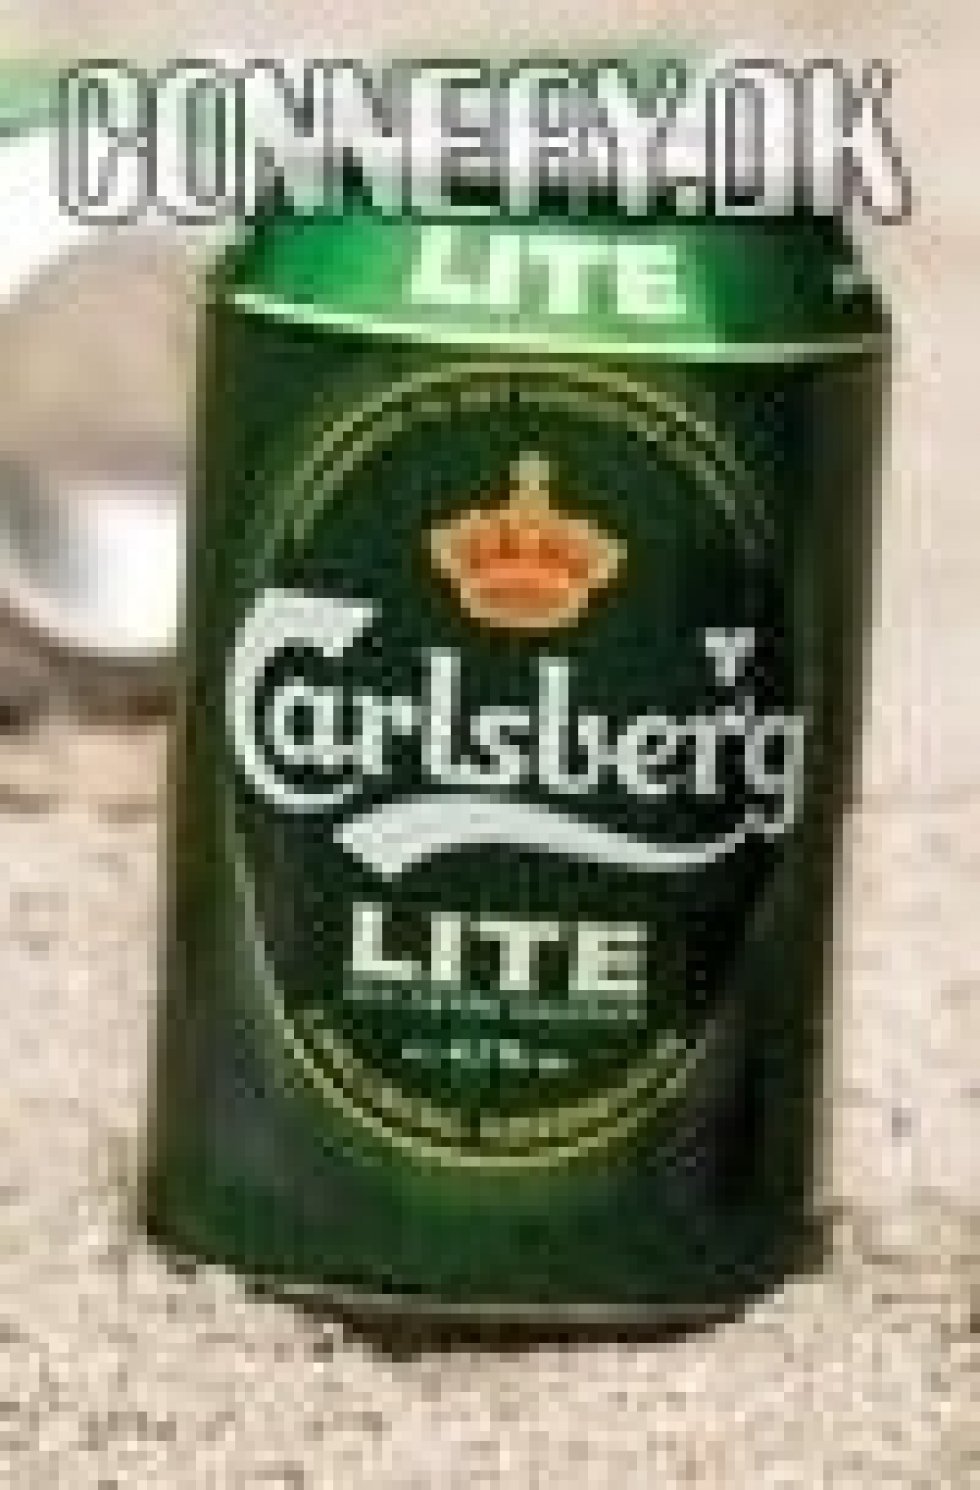 Carlsberg Lite